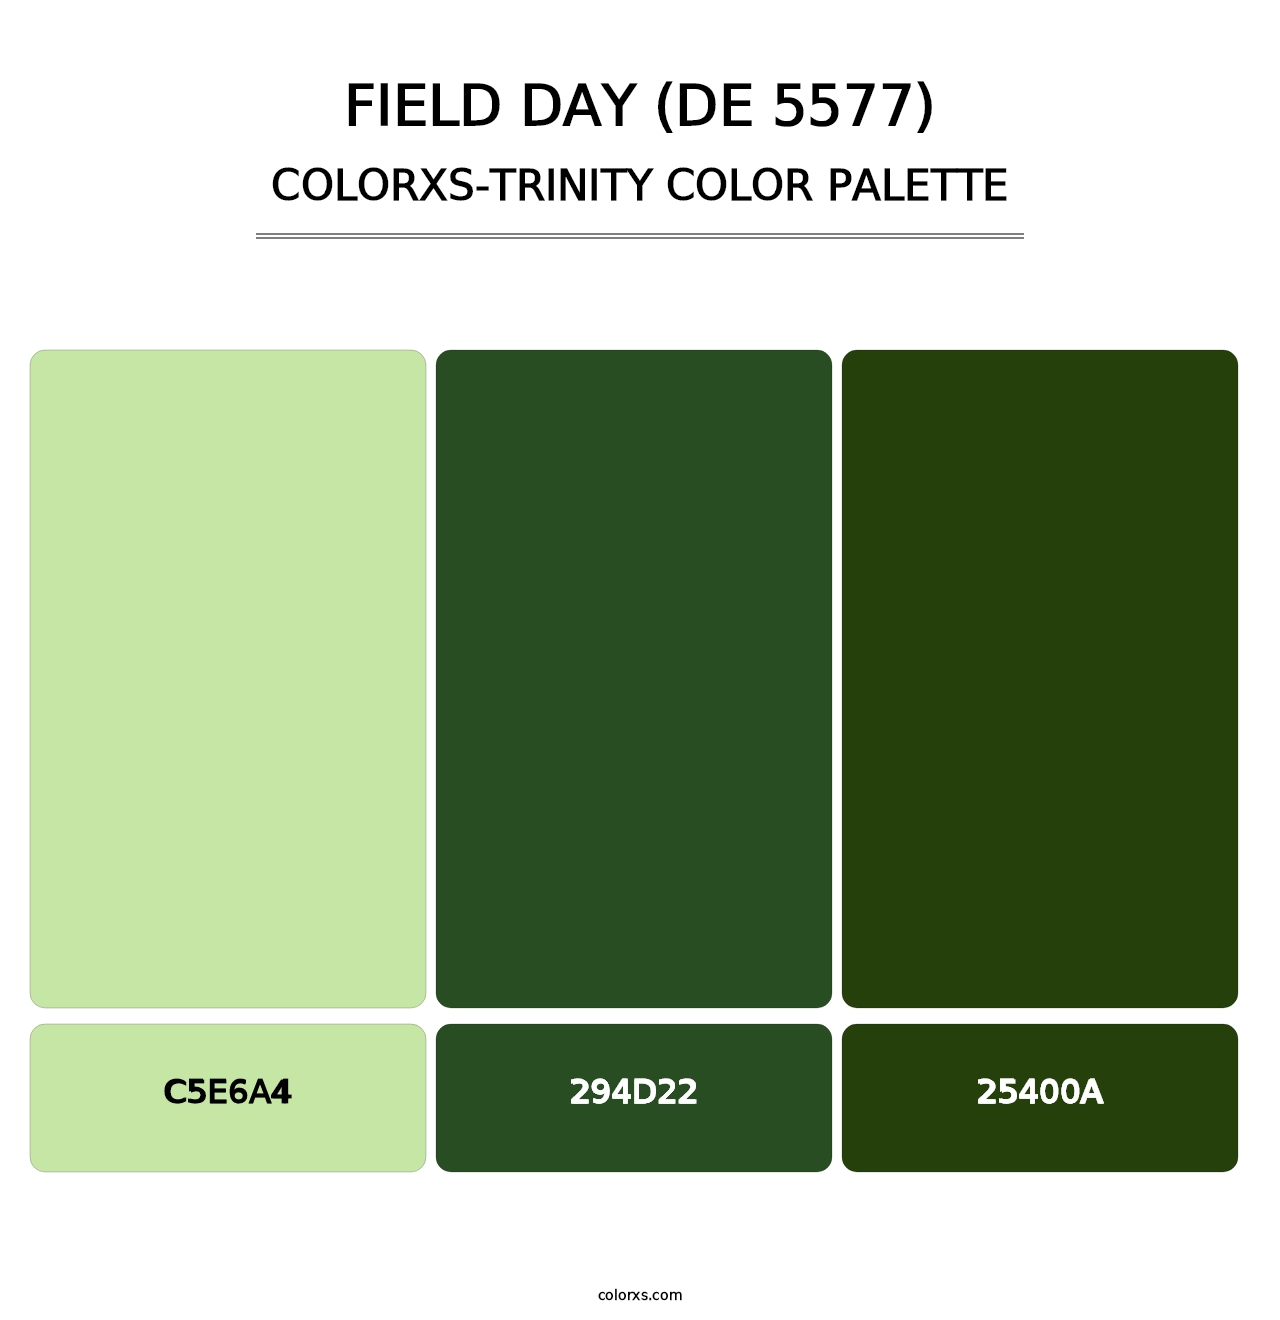 Field Day (DE 5577) - Colorxs Trinity Palette